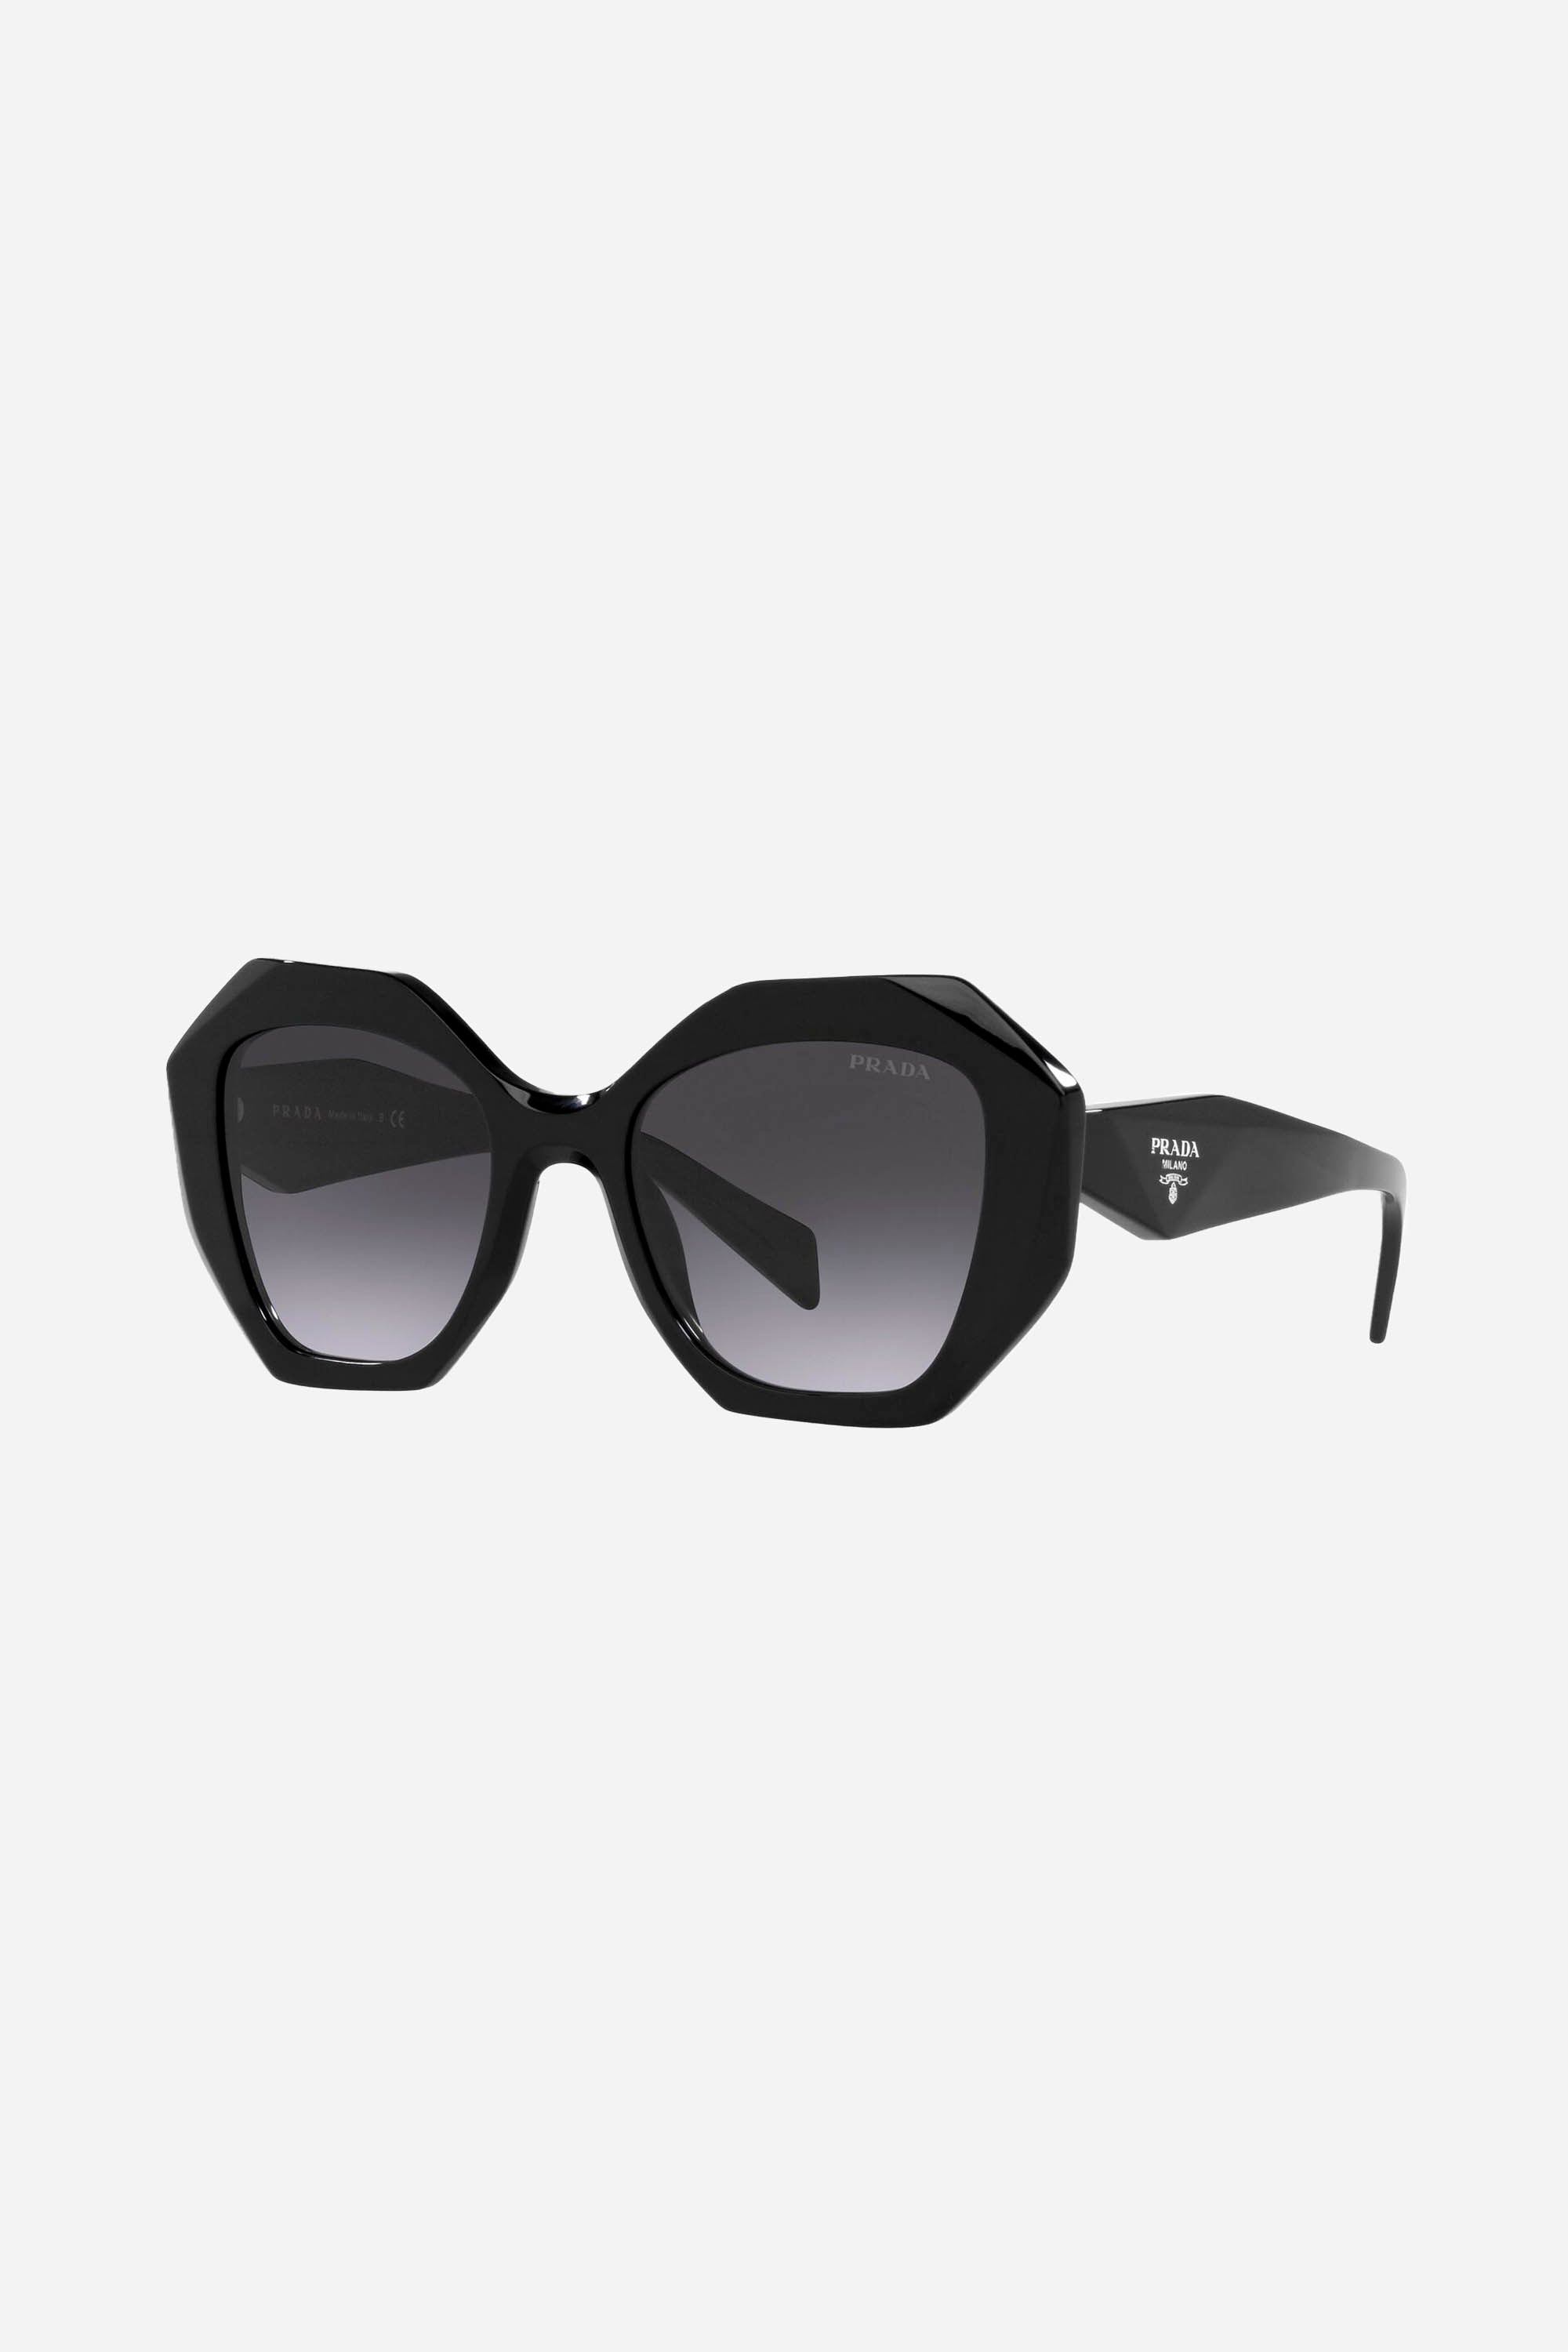 Prada hexagonal black sunglasses - Eyewear Club